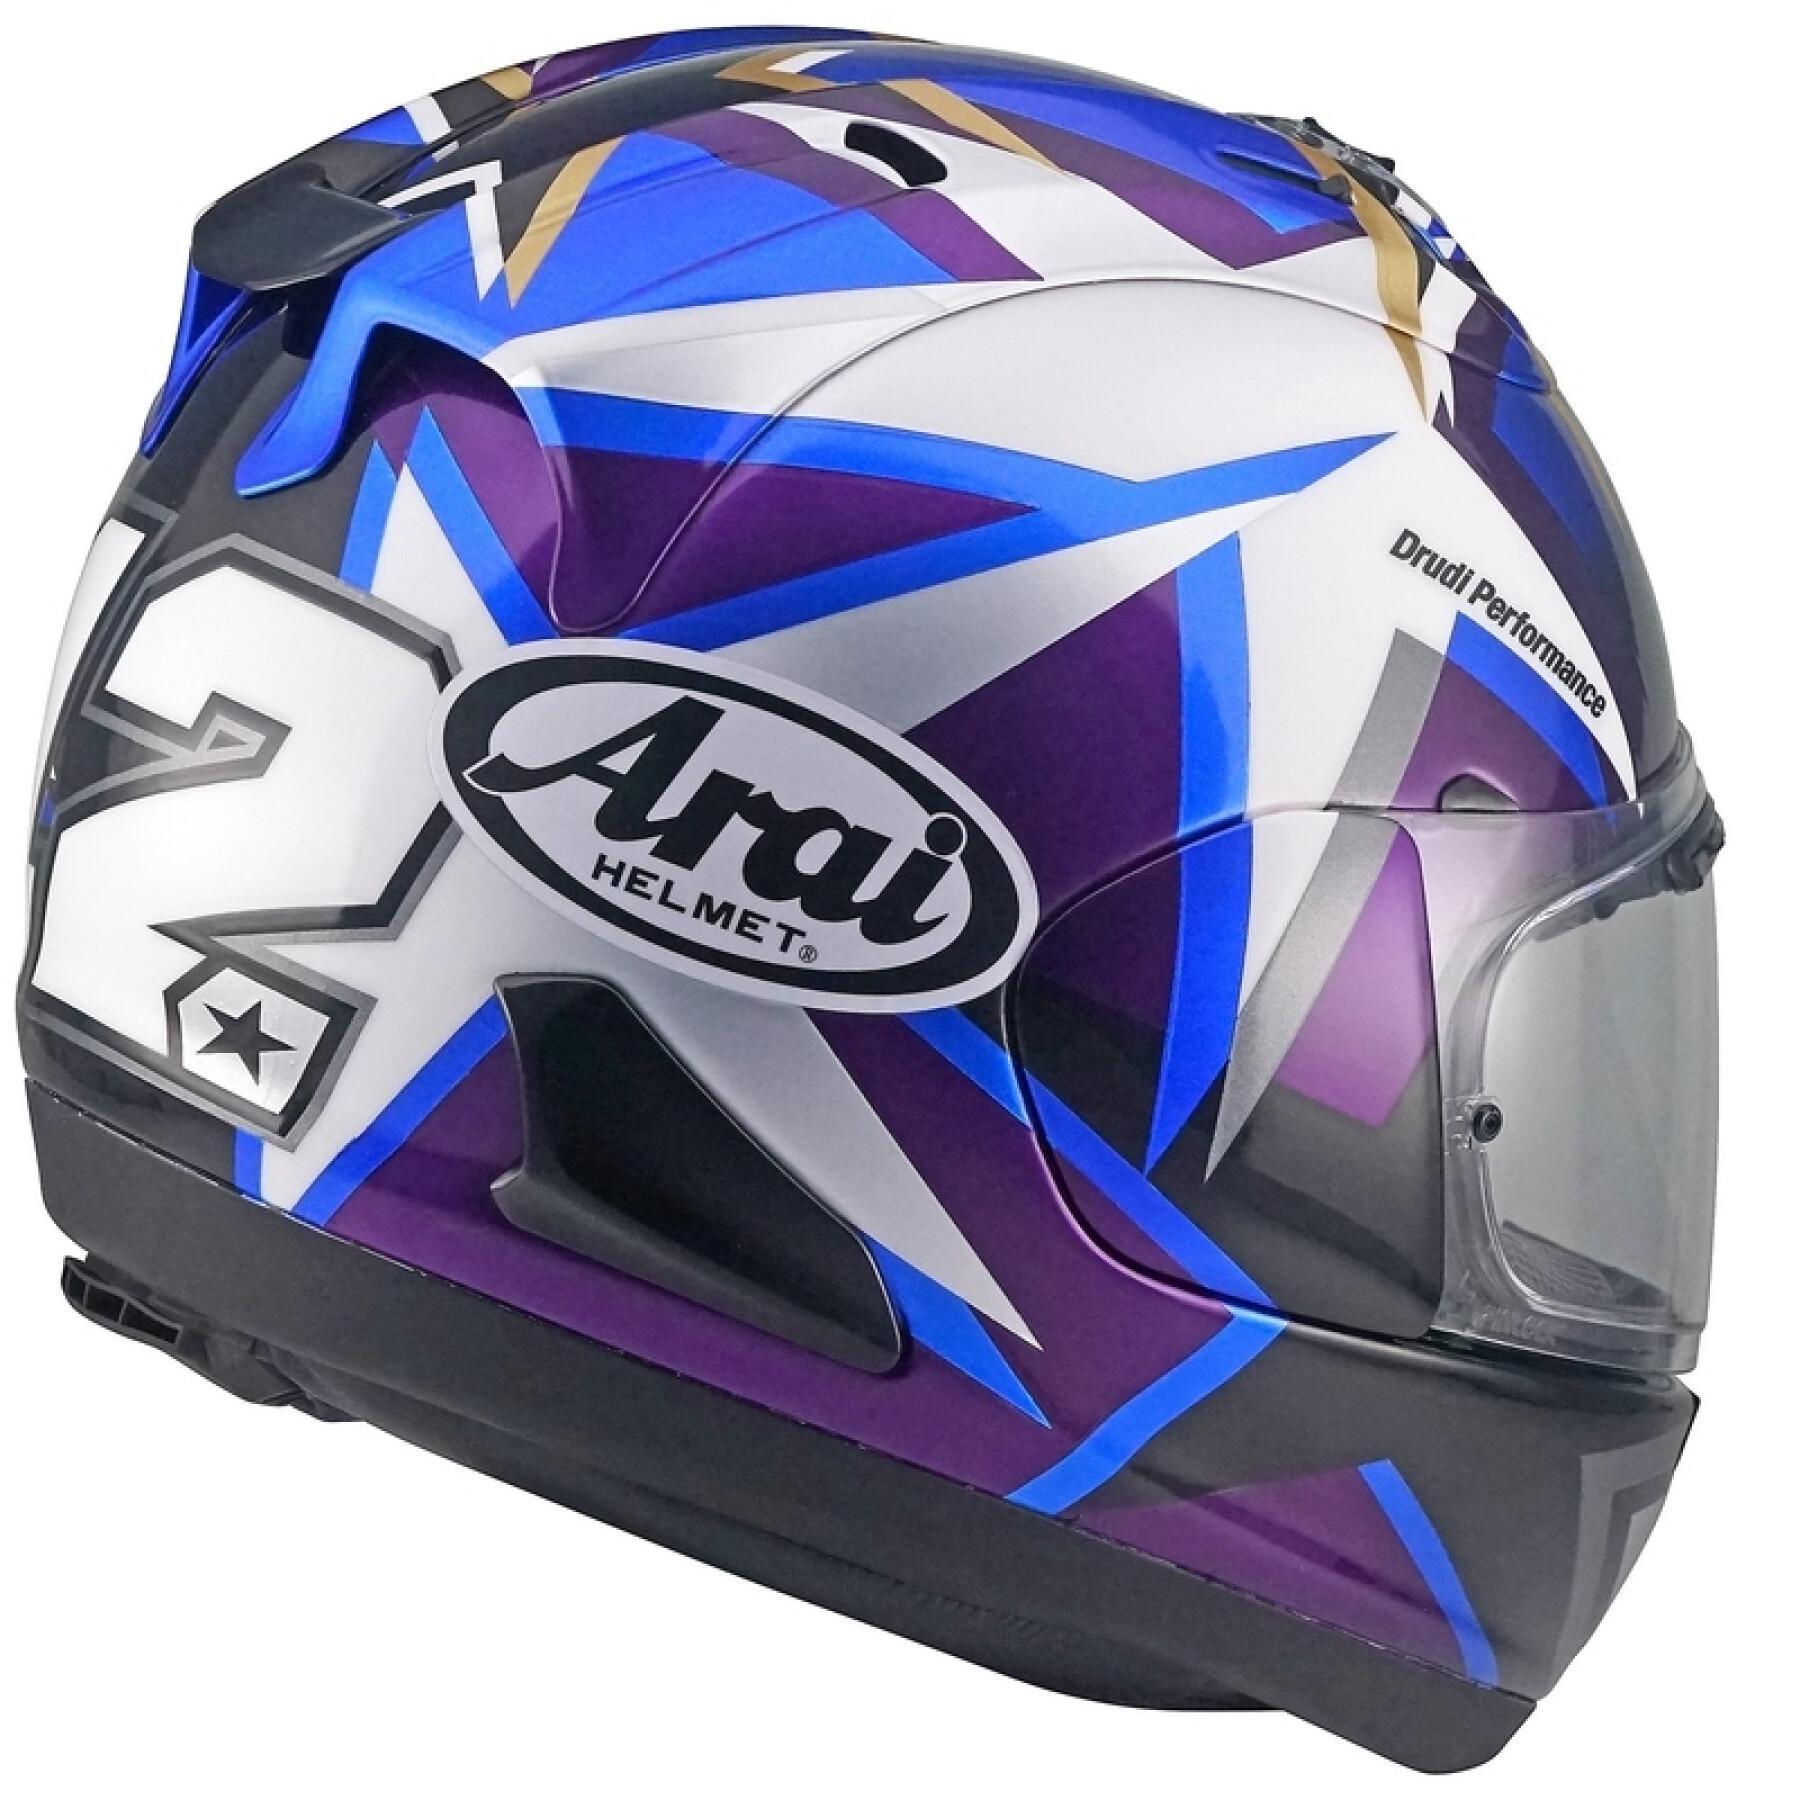 Full face motorcycle helmet Arai RX-7V Evo MVK Stars - Replica